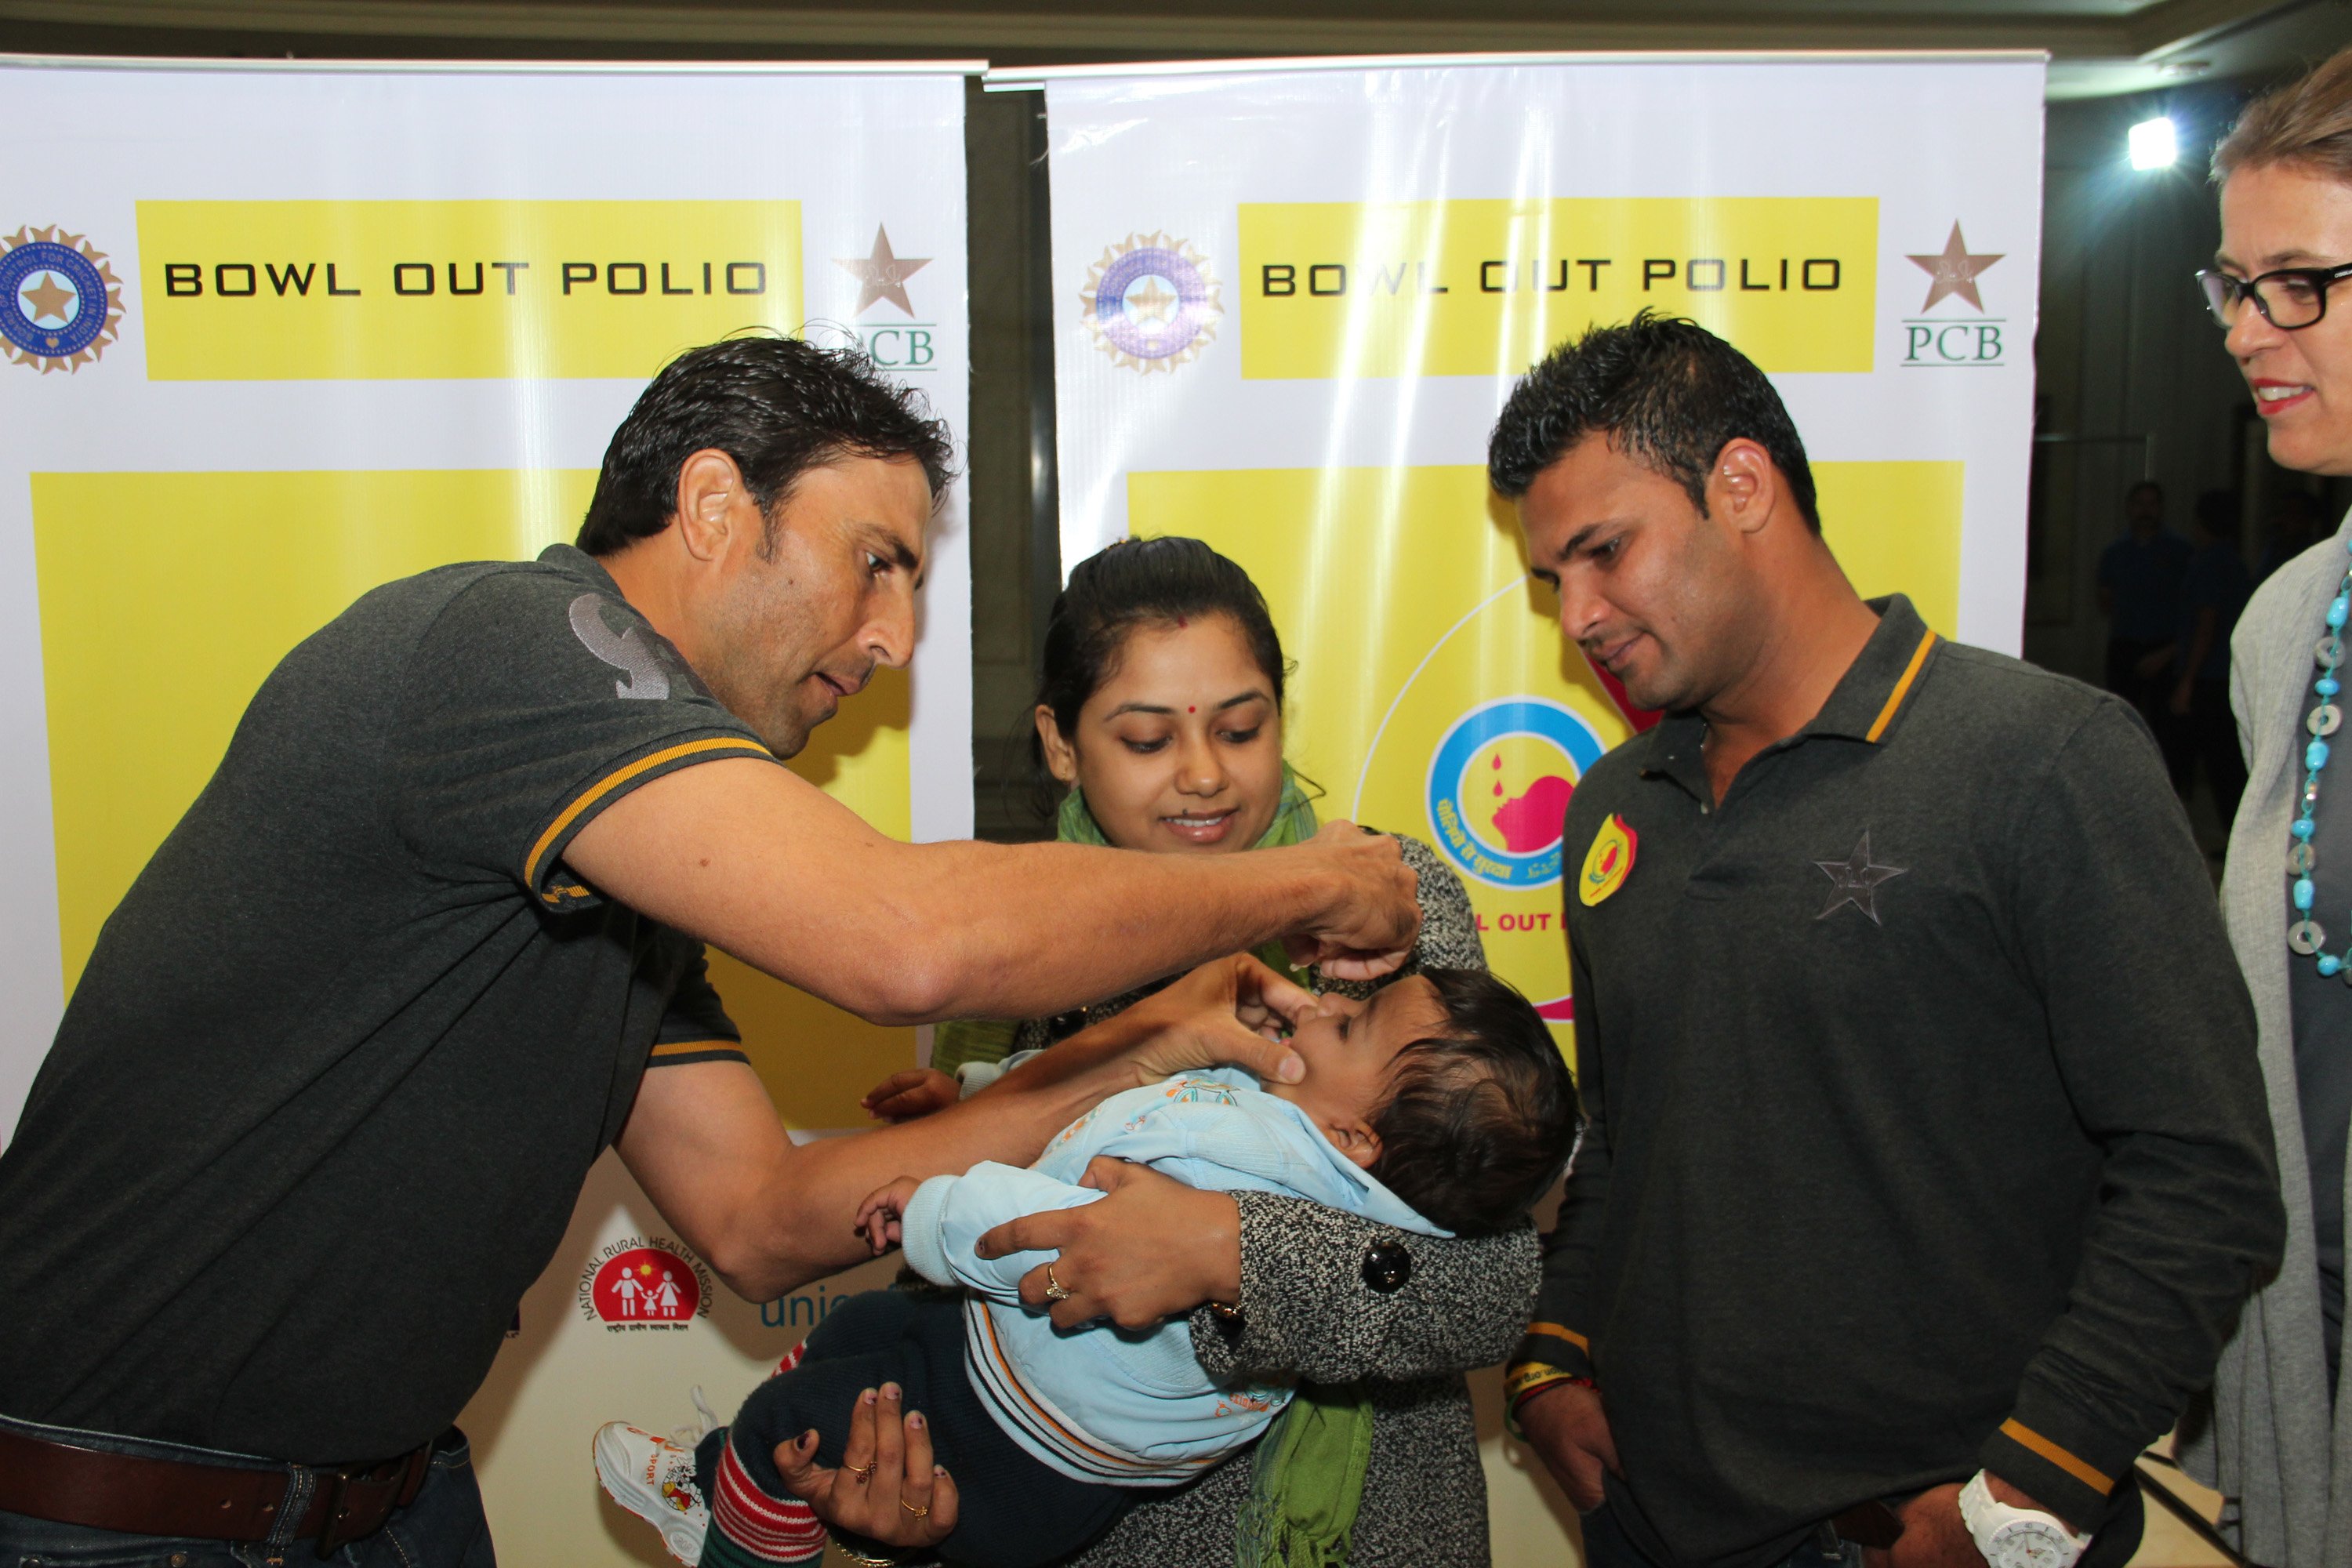 pakistani batsman younus khan administers polio drops to children at an event in new delhi as fellow batsman imran farhat looks on